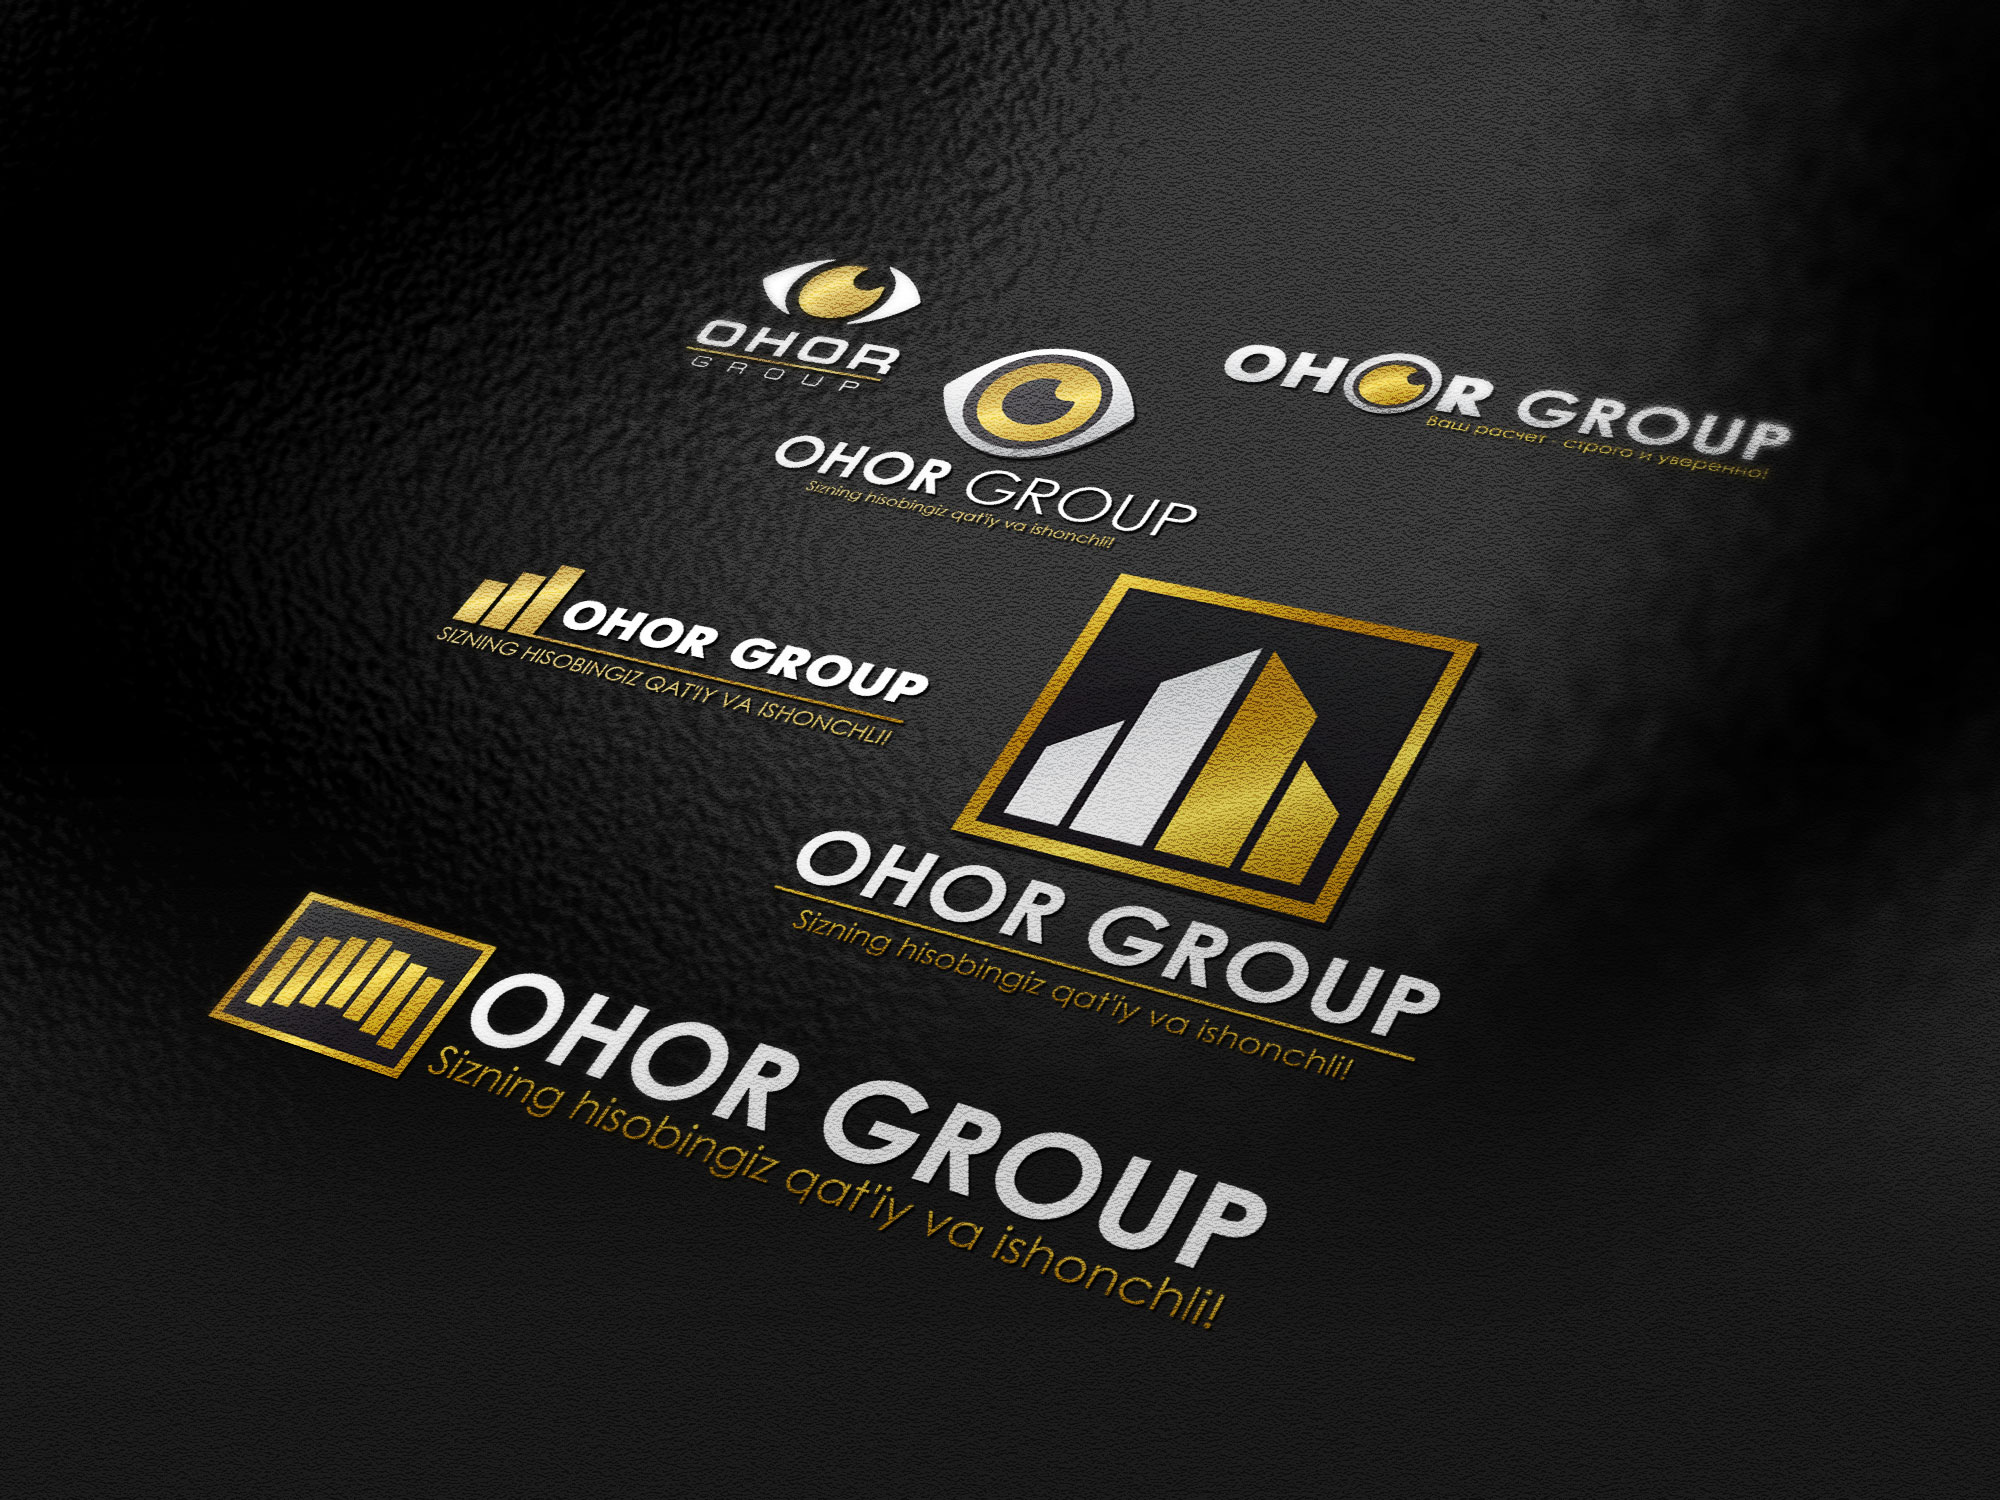 OGOR Group